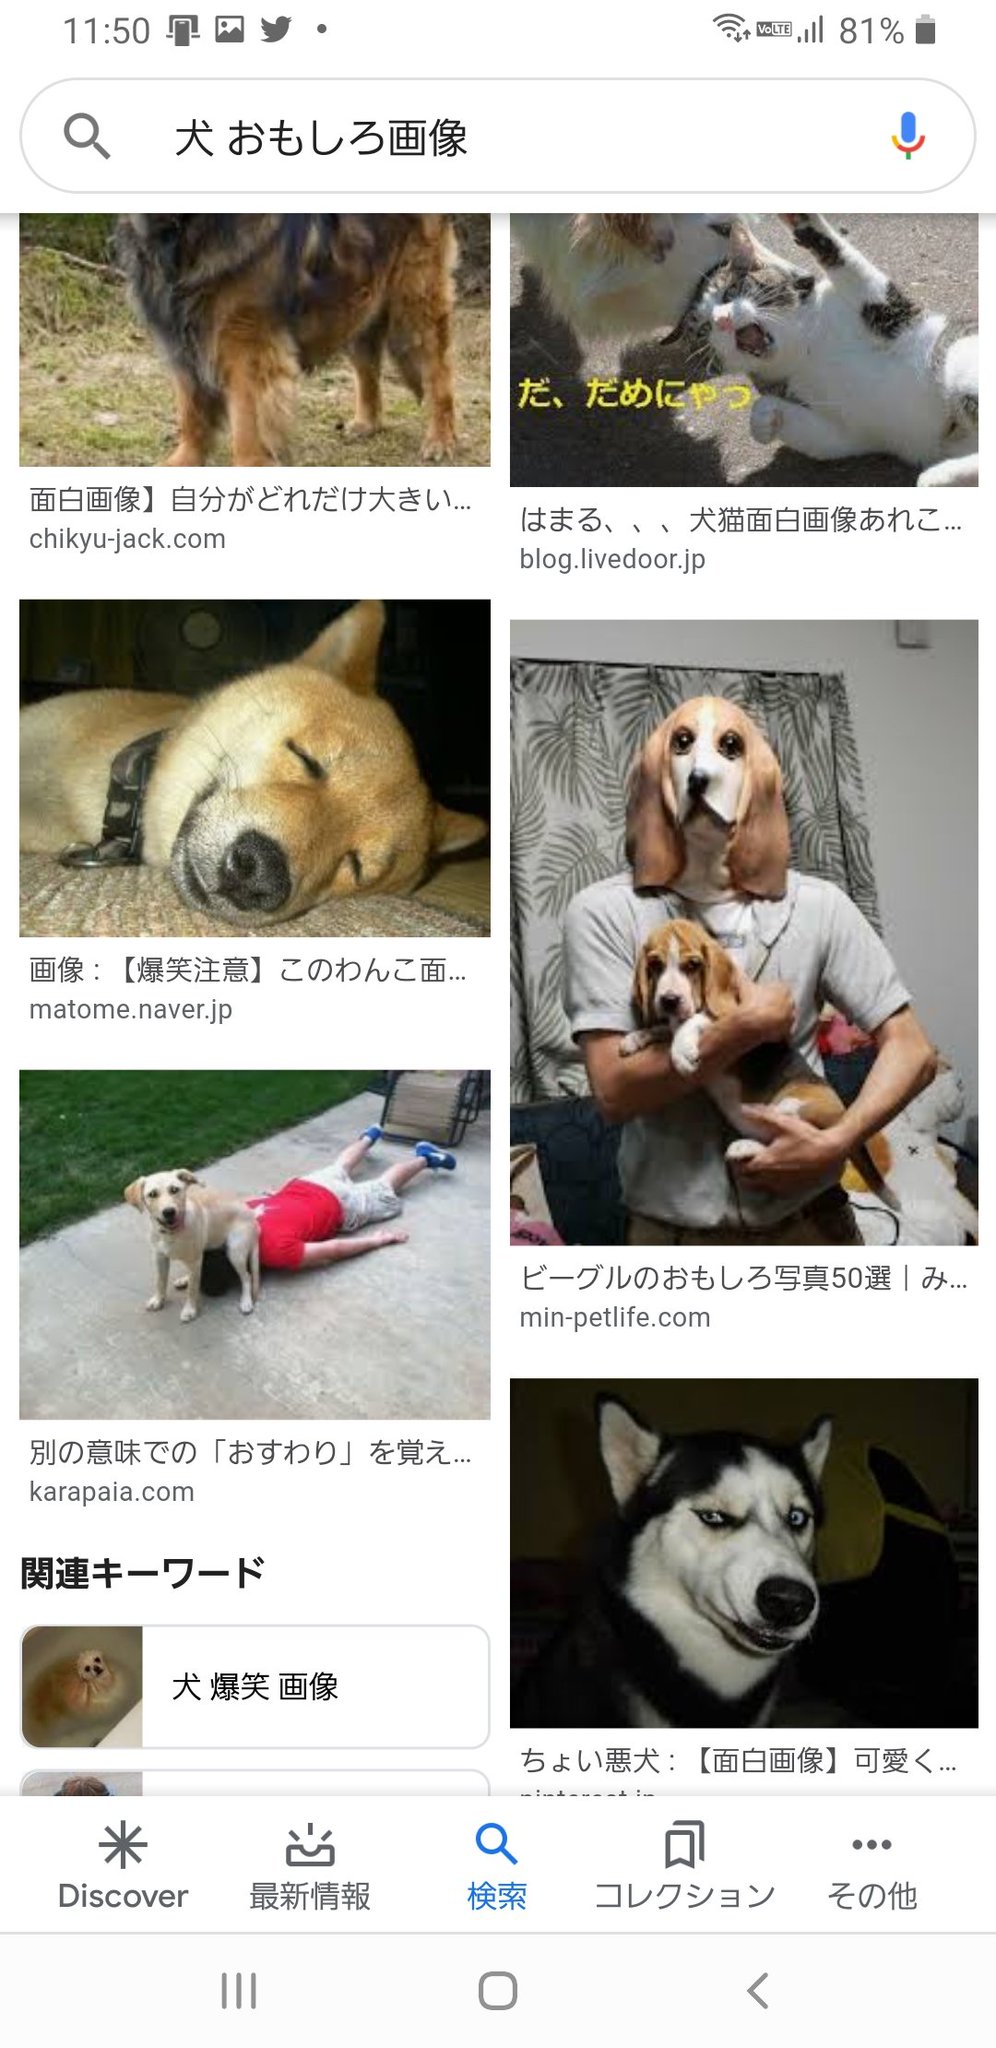 Hotaeru Zeyo 暇潰しにビーグルおもしろ画像って検索したら一番最初に自分が出てきてワロタ 犬おもしろ画像にもおったしw ビーグル可愛い